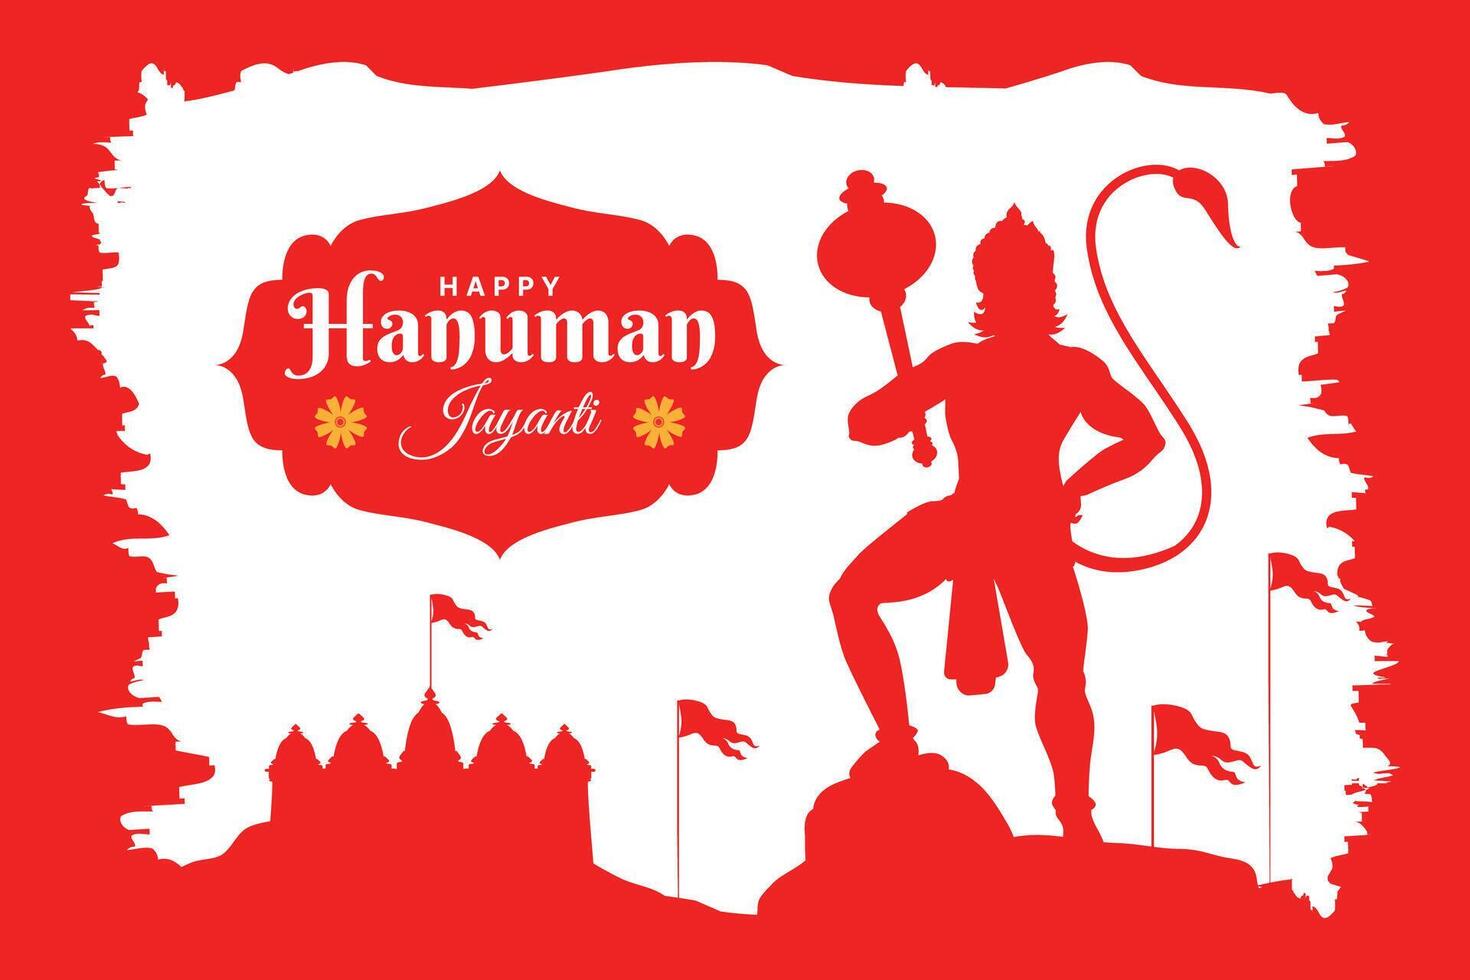 gelukkig Hanuman Jayanti festival, viering van de geboorte van heer hanuman, groet kaart post vector